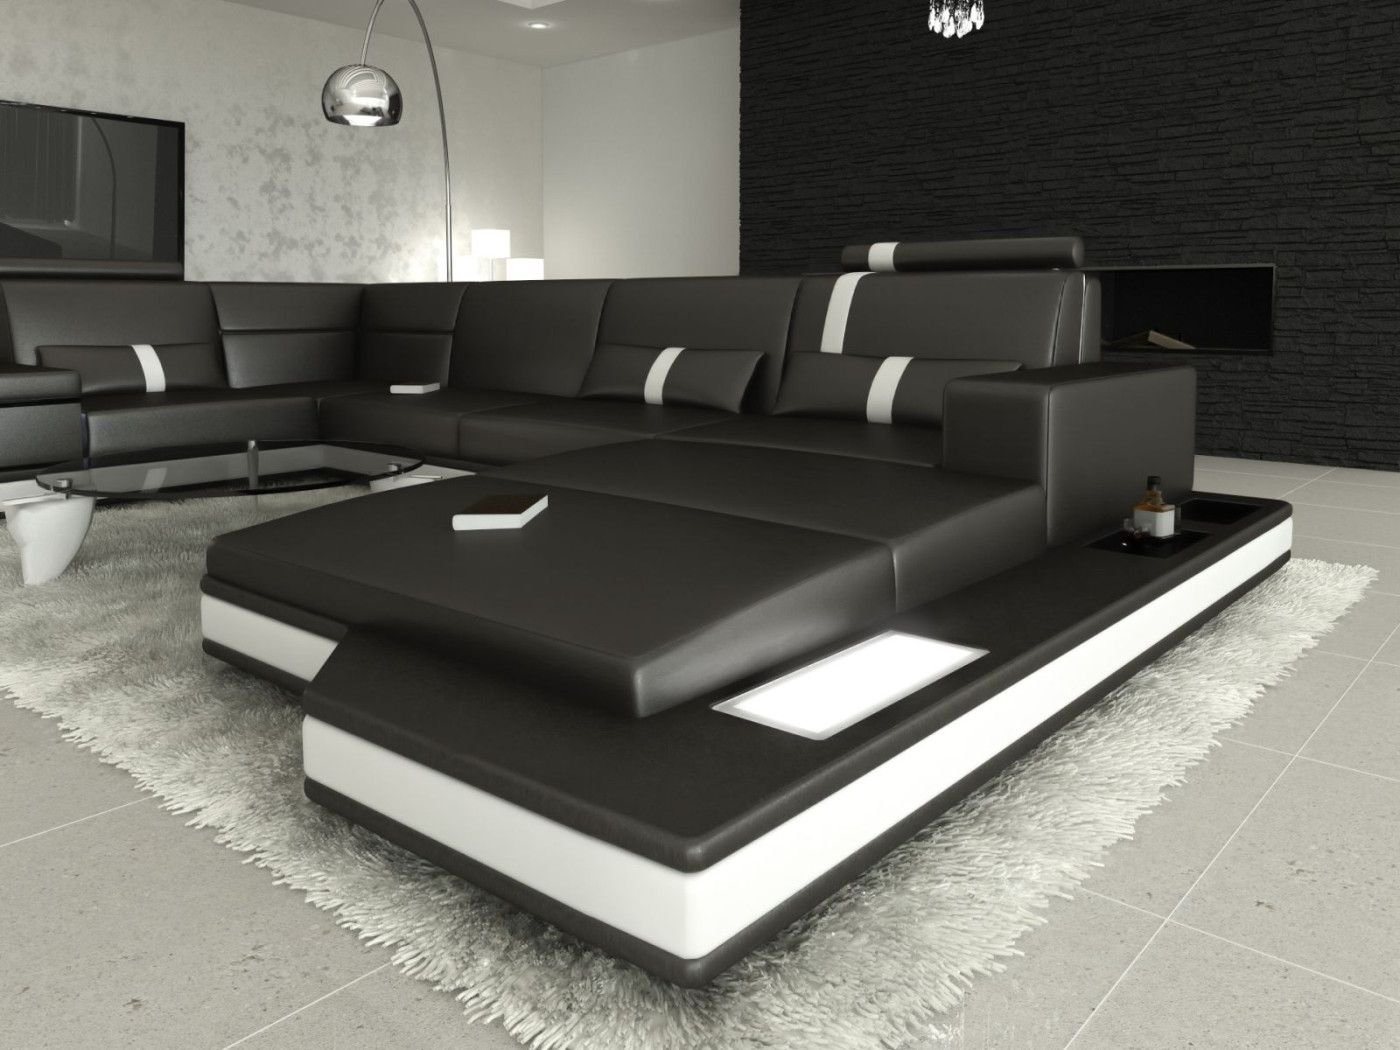 Sofa Dreams Wohnlandschaft Ledersofa Ledercouch Messana U Form Leder Sofa, Couch, mit LED, wahlweise mit Bettfunktion als Schlafsofa, Designersofa von Sofa Dreams